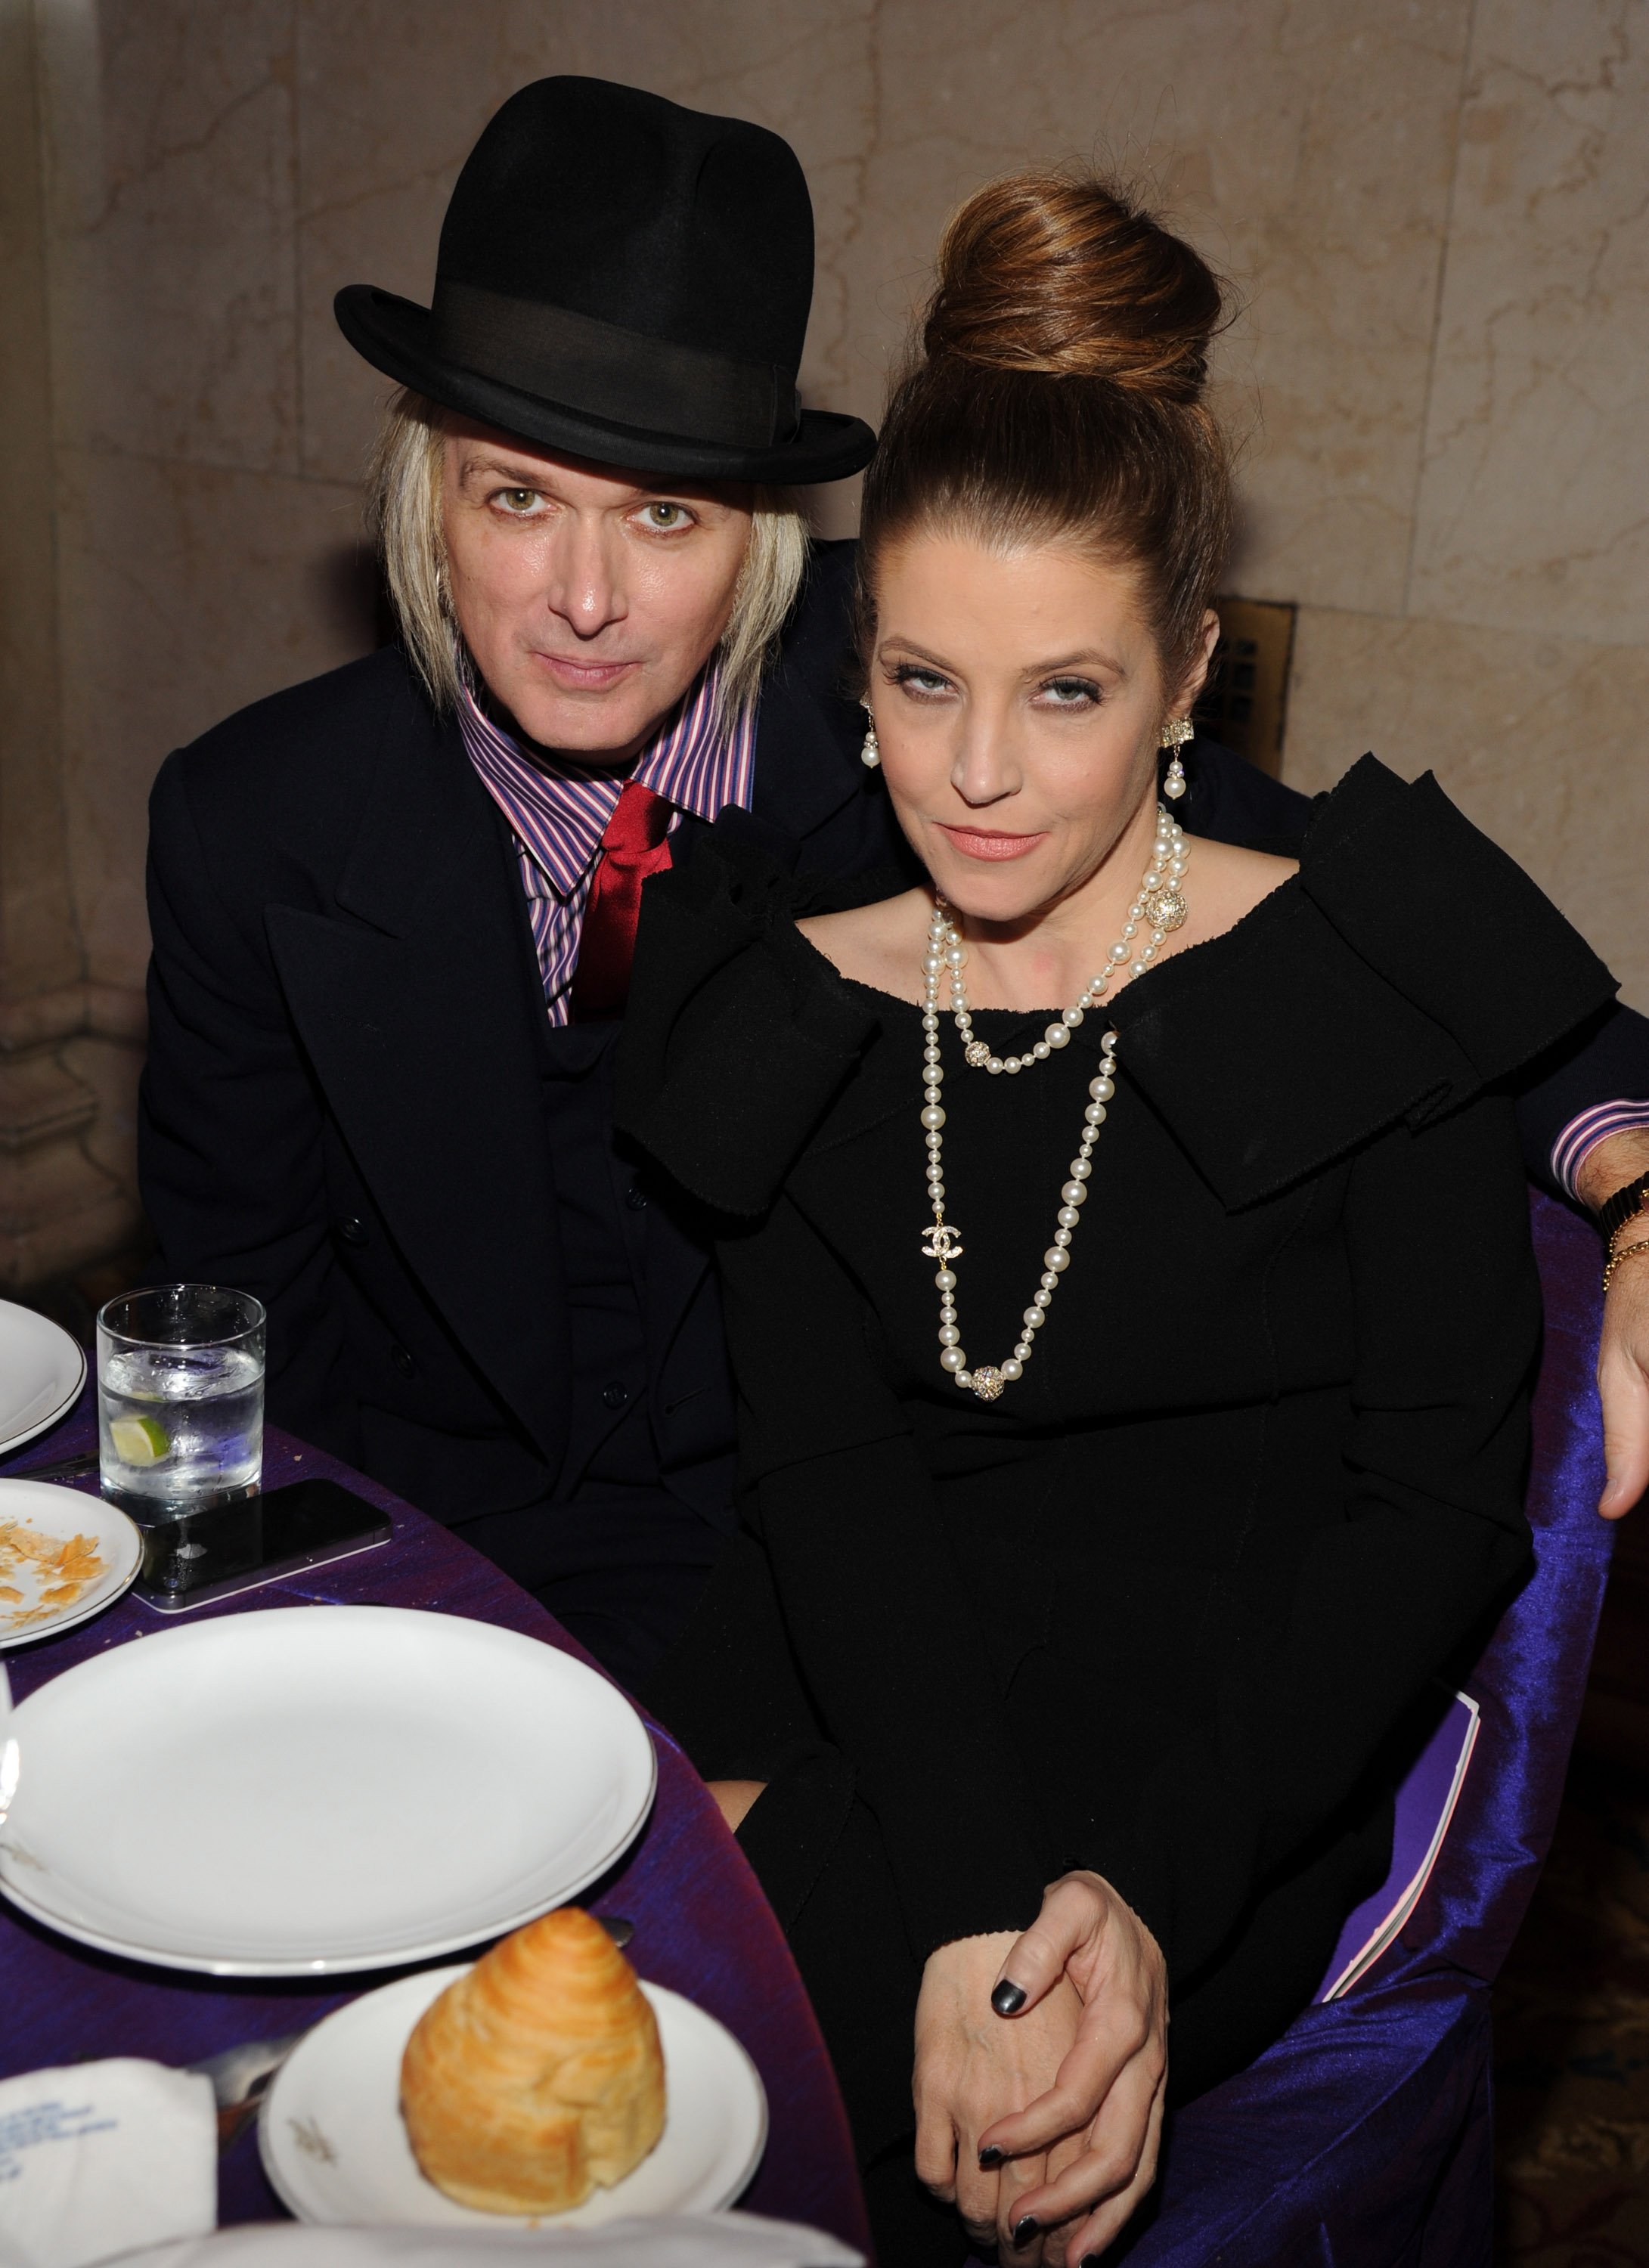 Michael Lockwood und Lisa Marie Presley, 2013 | Quelle: Getty Images